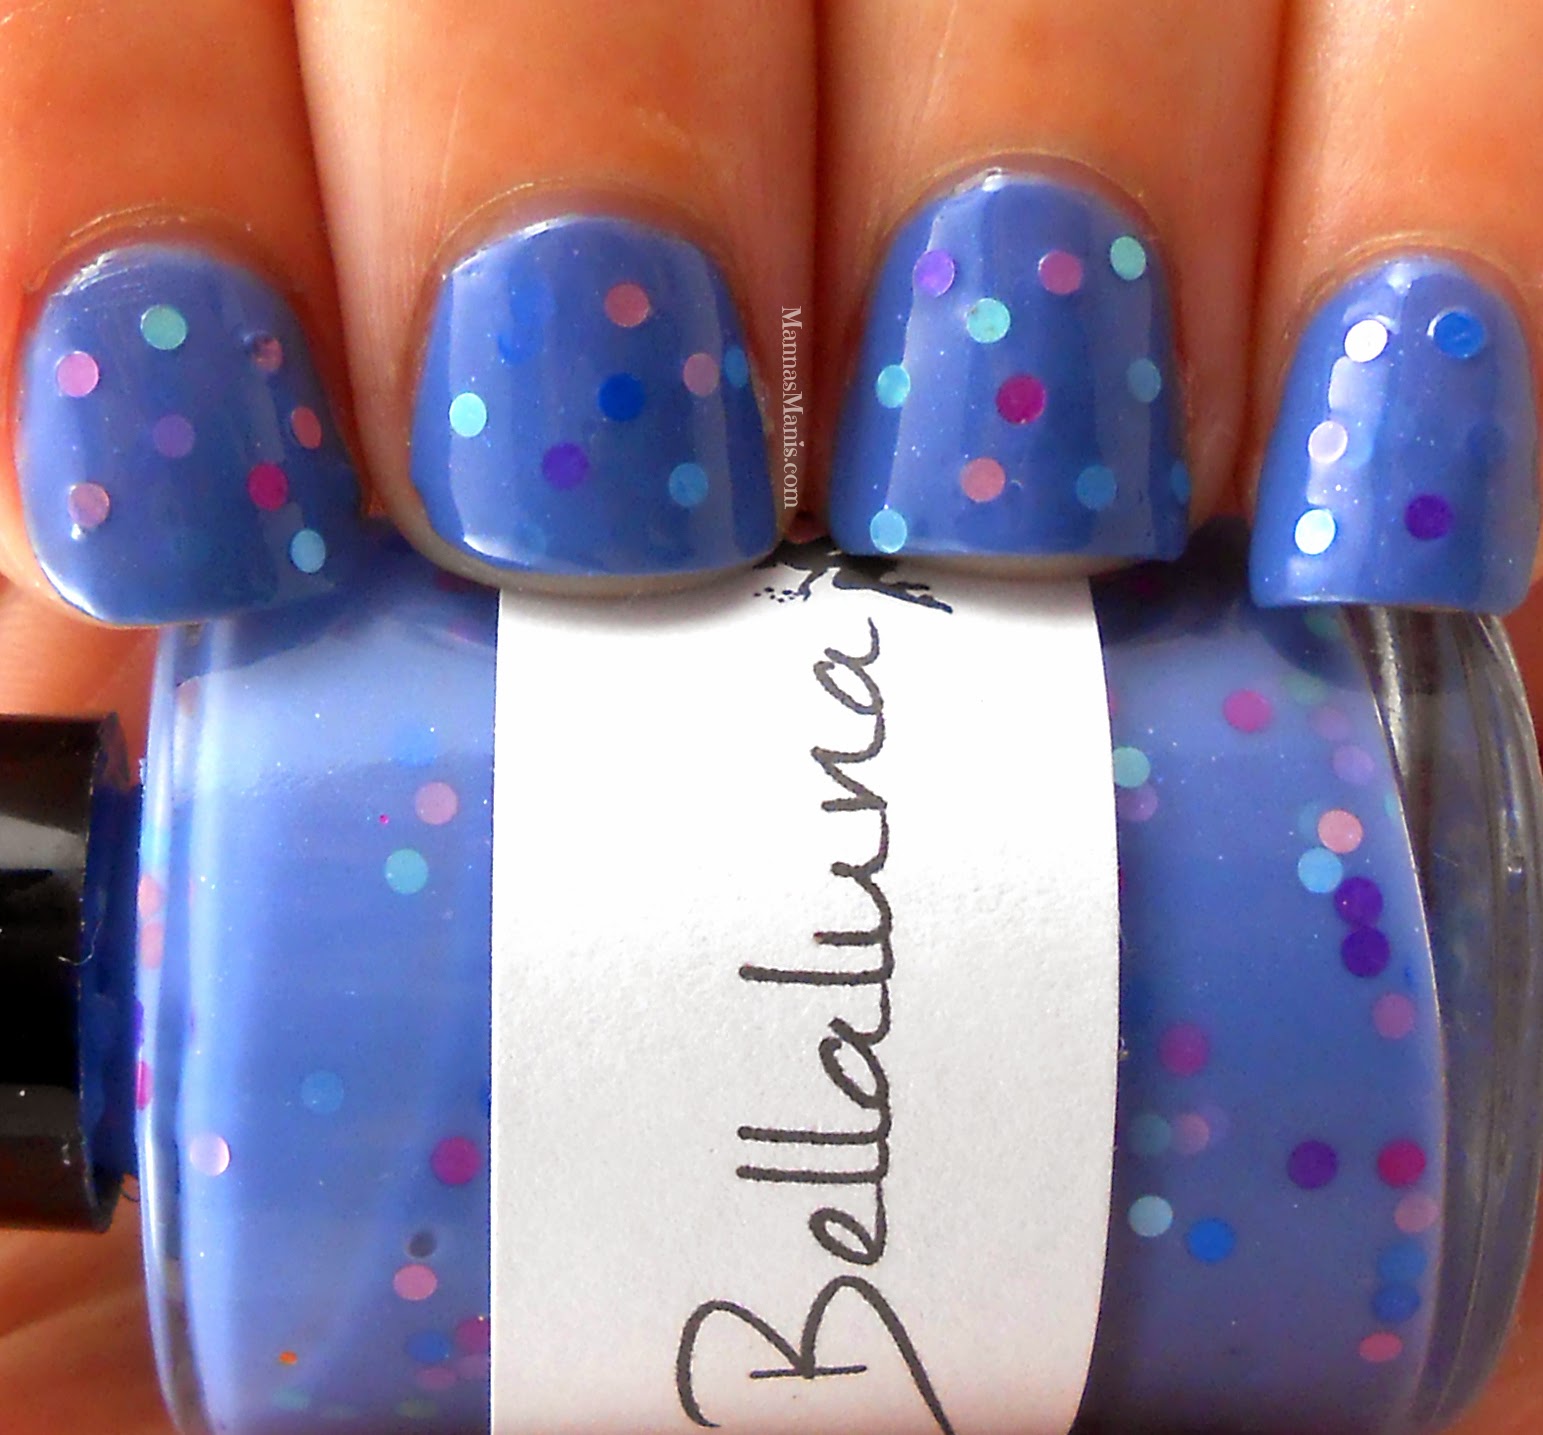 Bellaluna slumber party, a pale blue nail polish